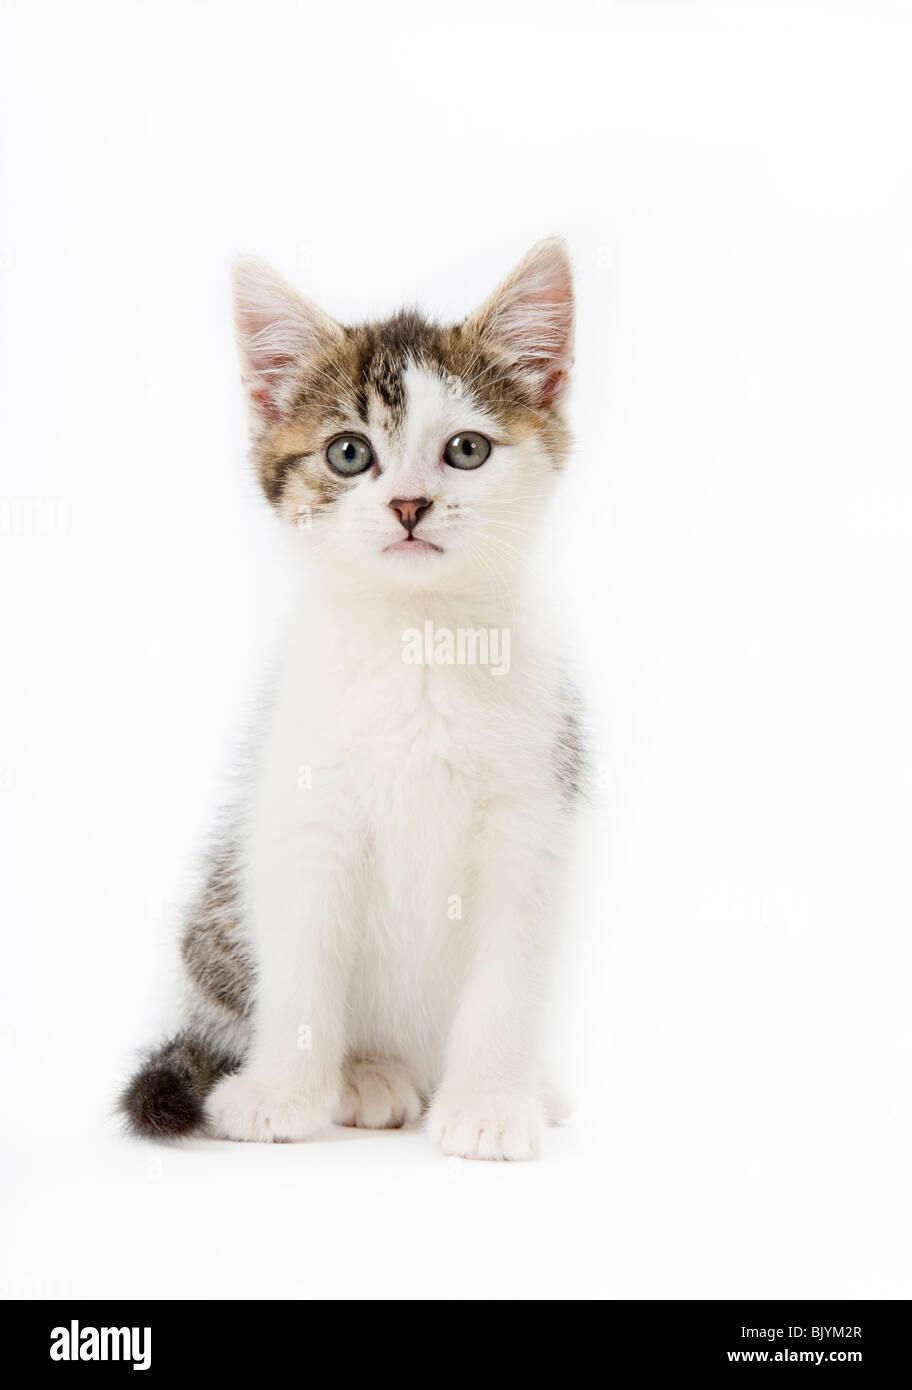 Tabby and White Kitten Stock Photo - Alamy